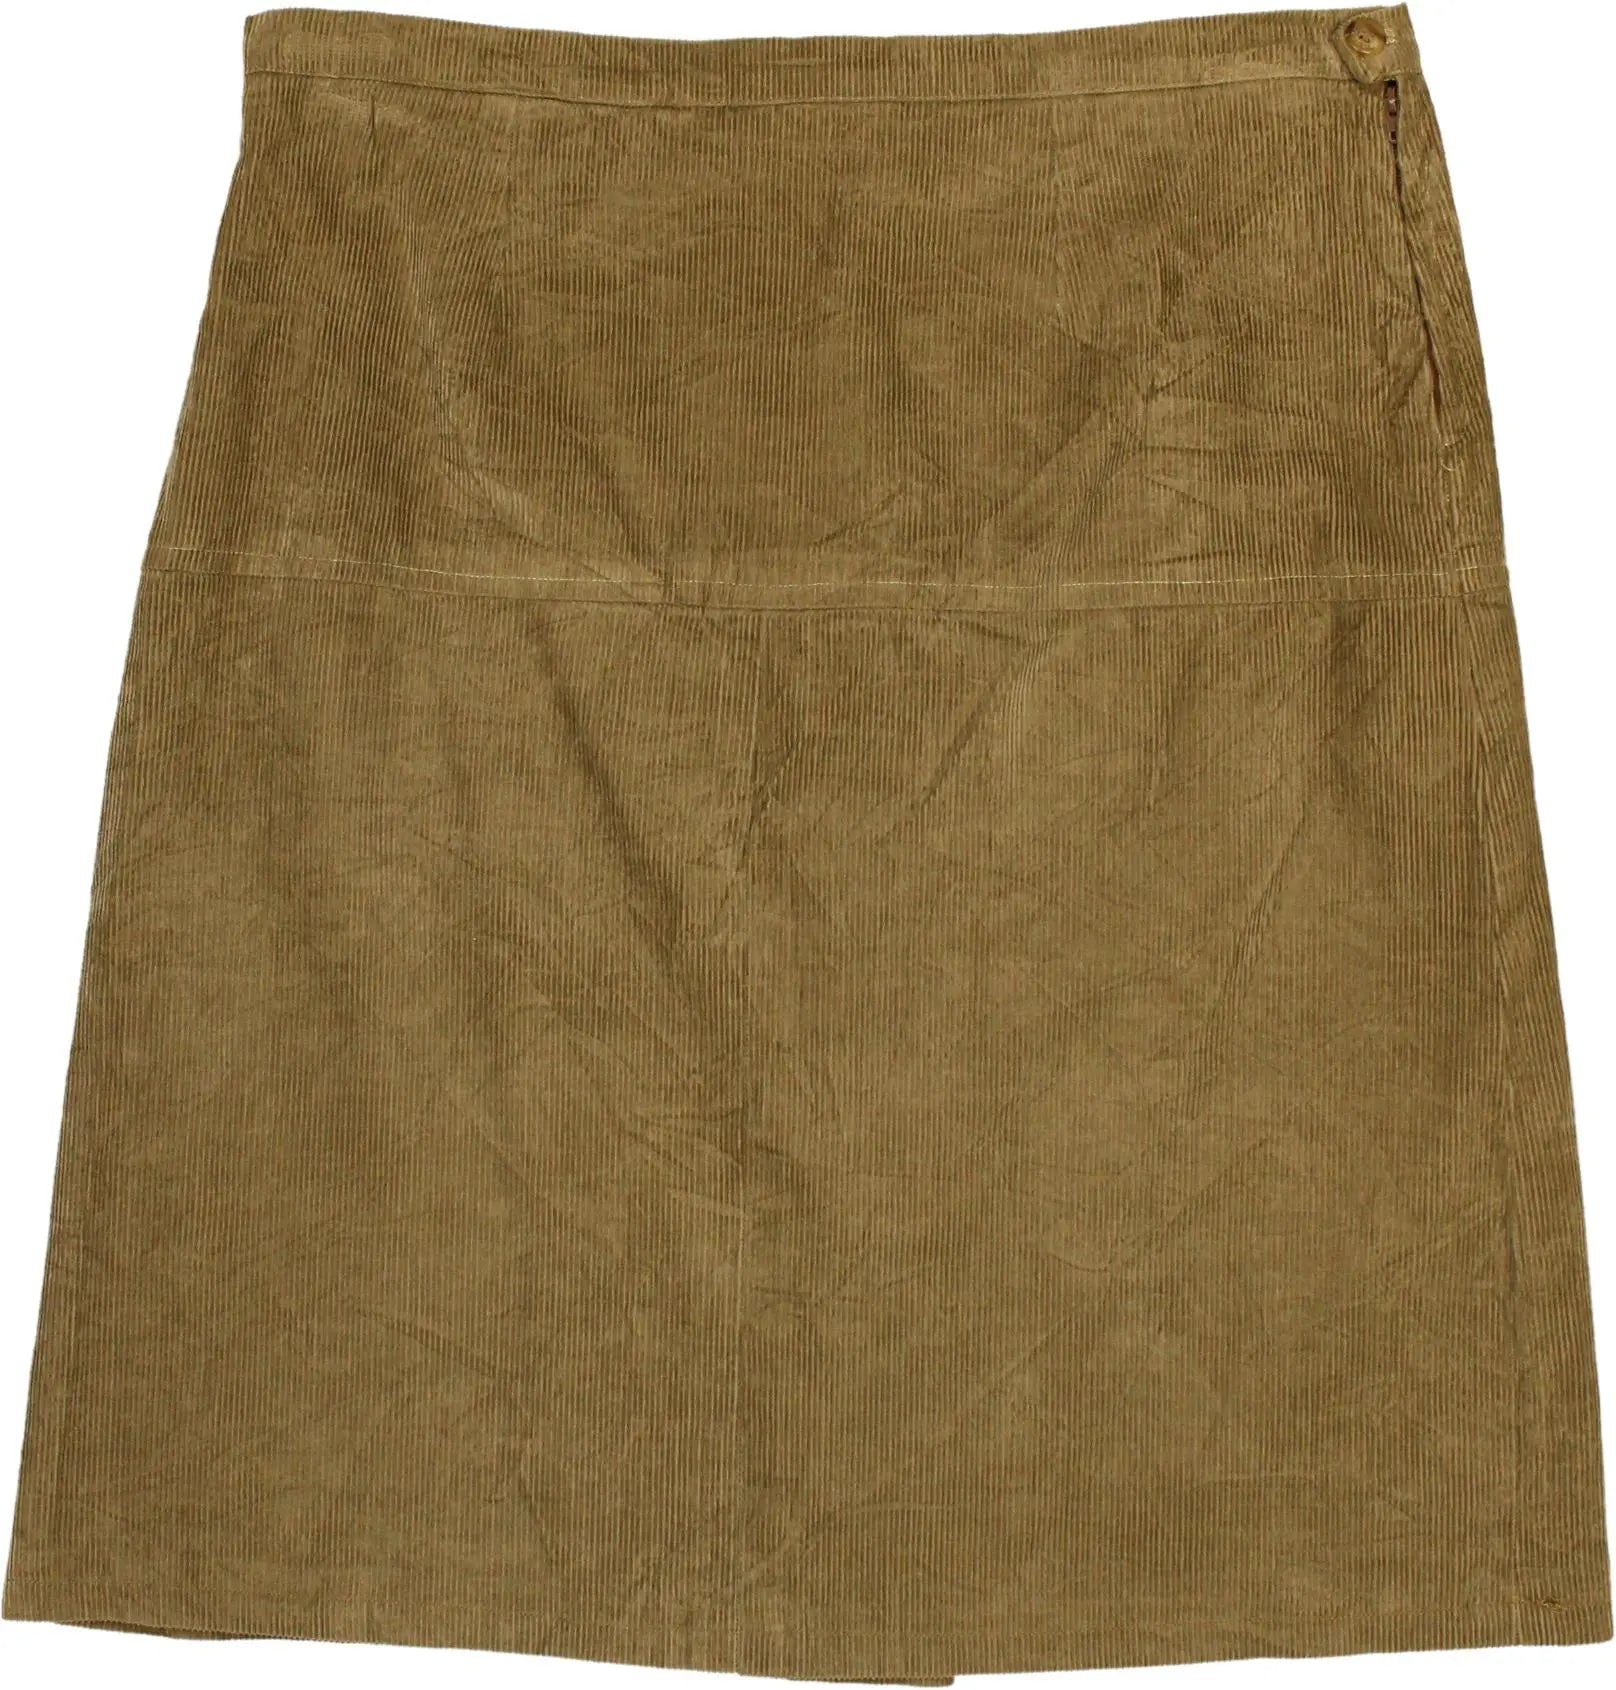 Handmade - Handmade Corduroy Skirt- ThriftTale.com - Vintage and second handclothing